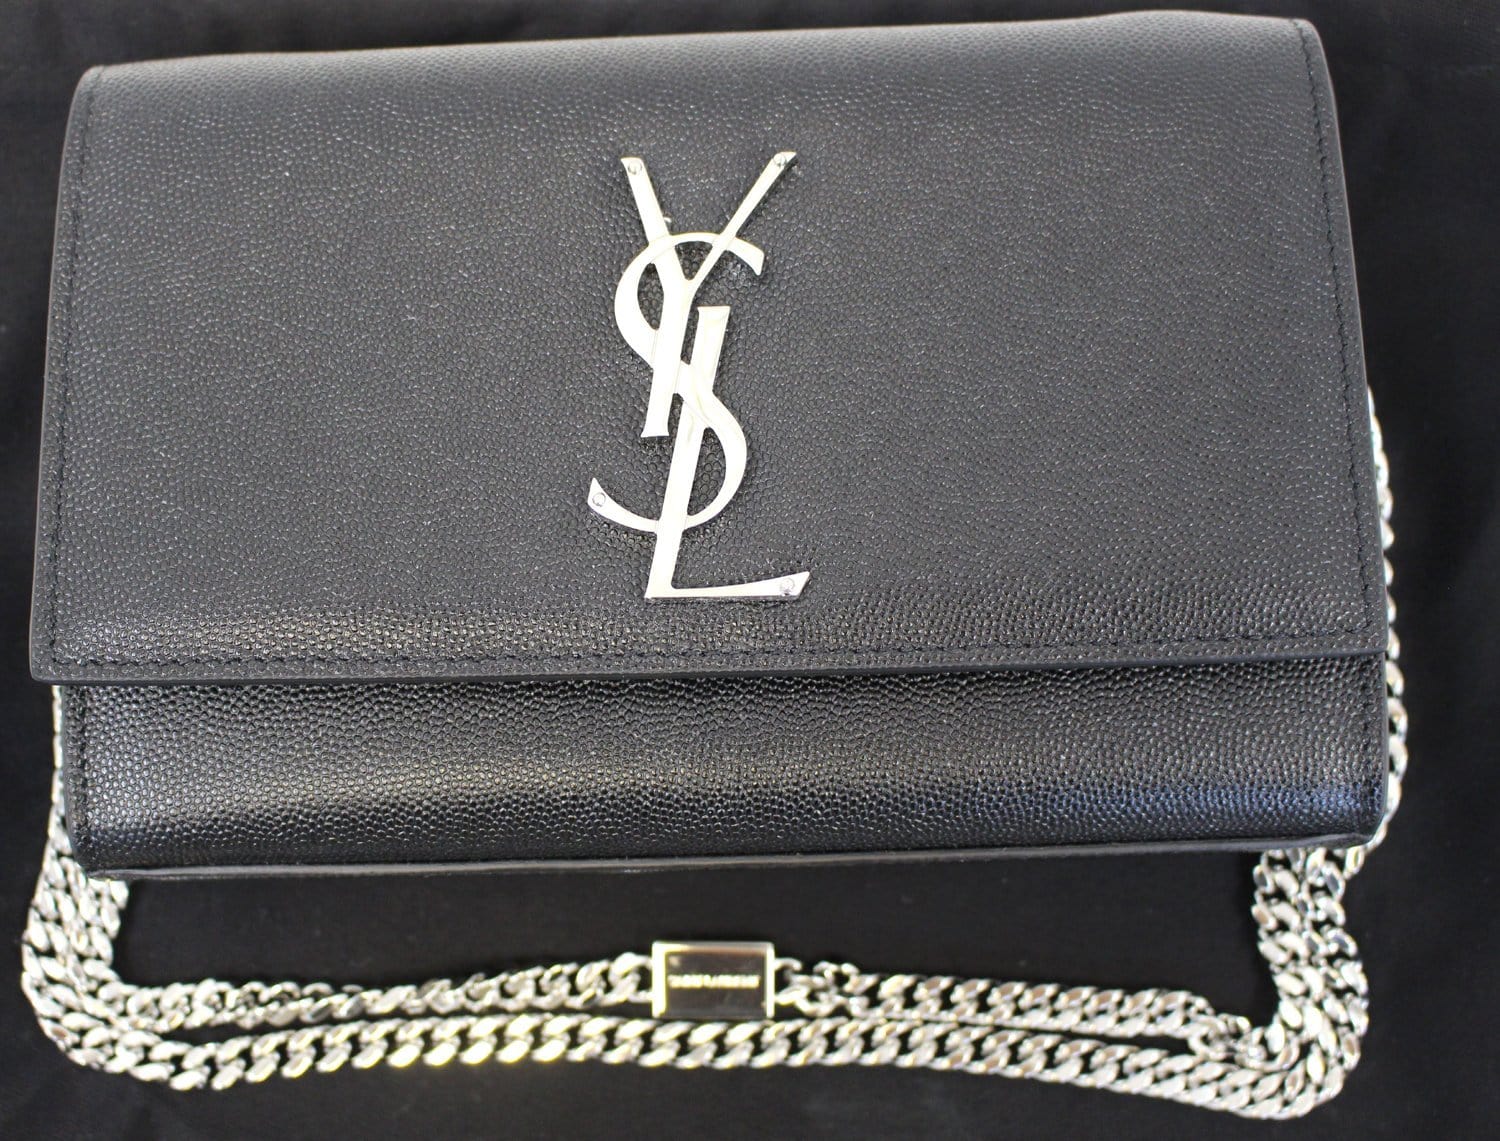 Replica YSL Yves Saint Laurent Kate Bags for Sale